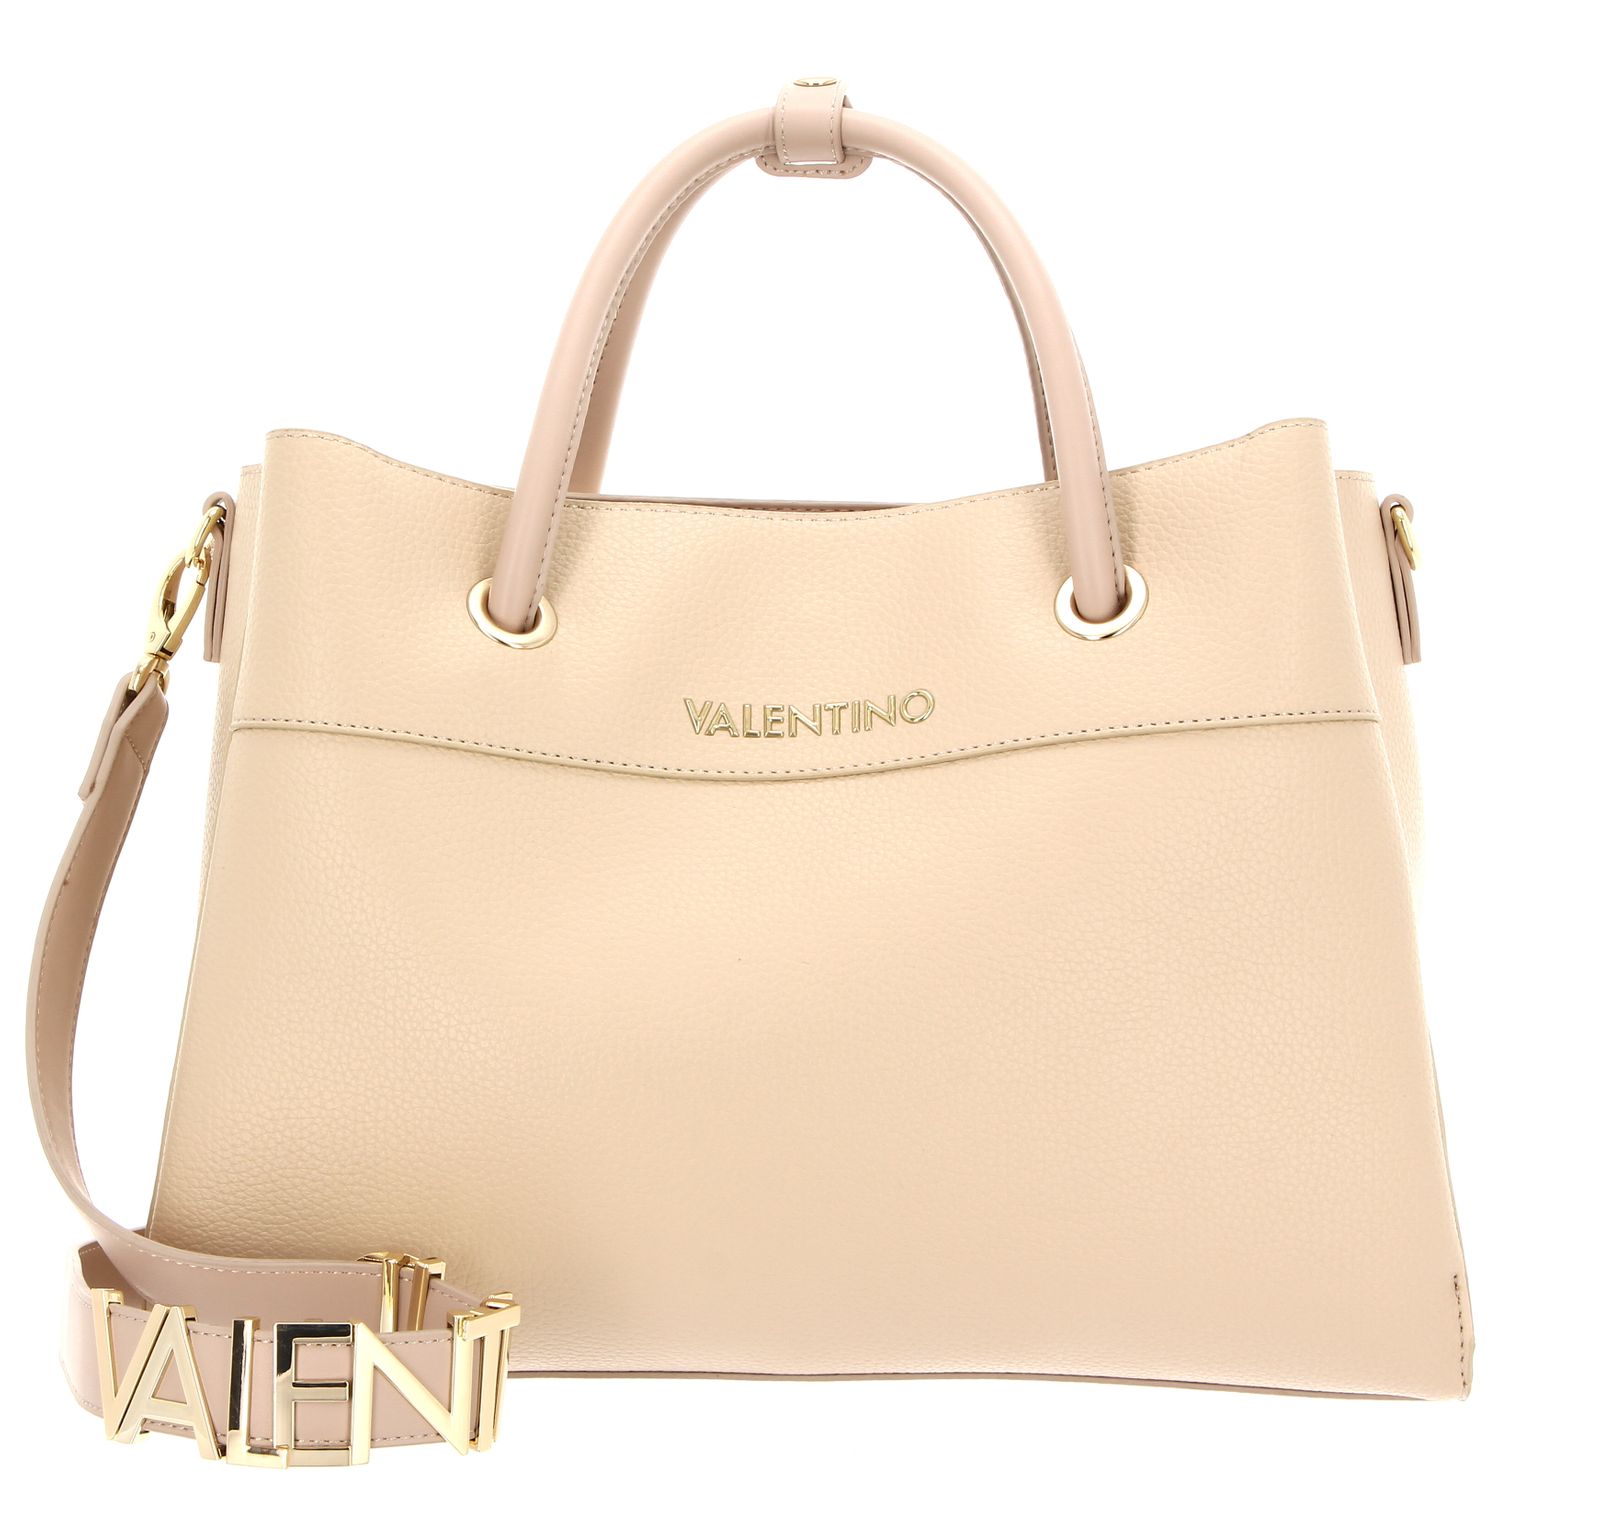 VALENTINO BAGS Alexia Ecru Bag Shopping